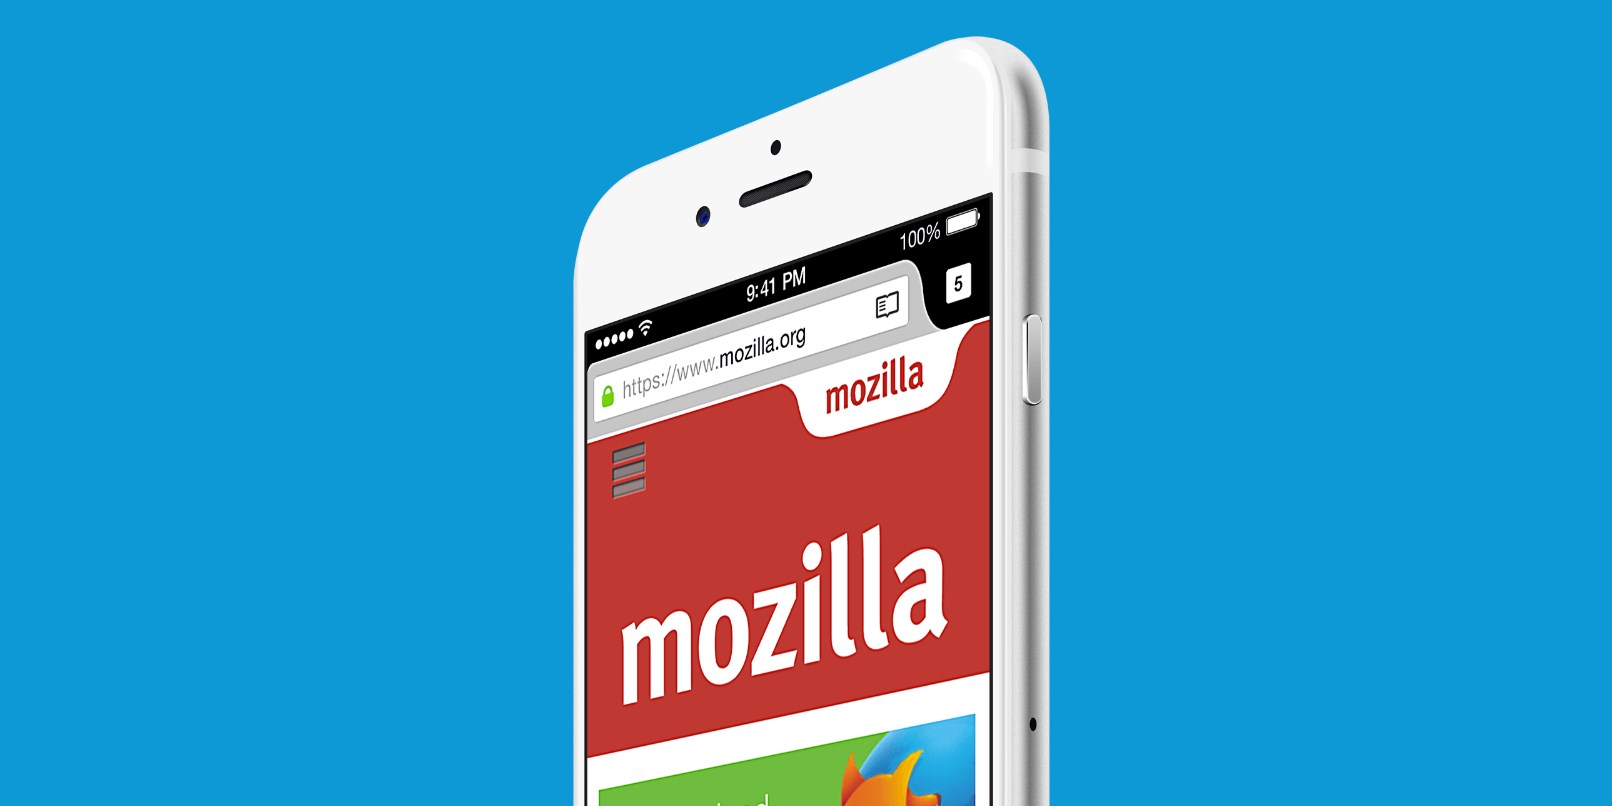 Firefox aterriza en iPhone con su famosa navegación privada